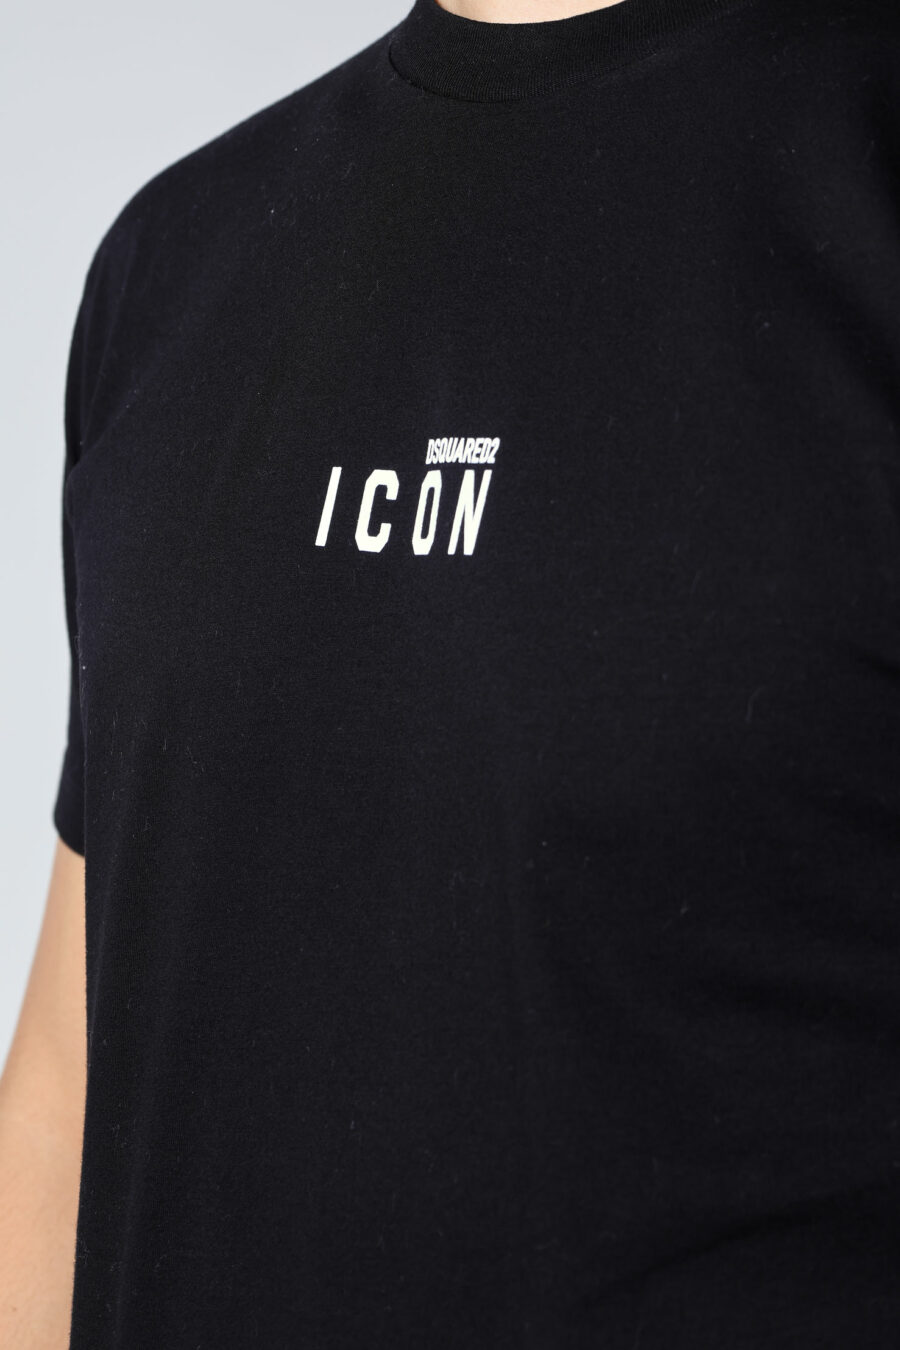 Schwarzes T-Shirt mit Minilogue "Ikone" - Untitled Catalog 05663